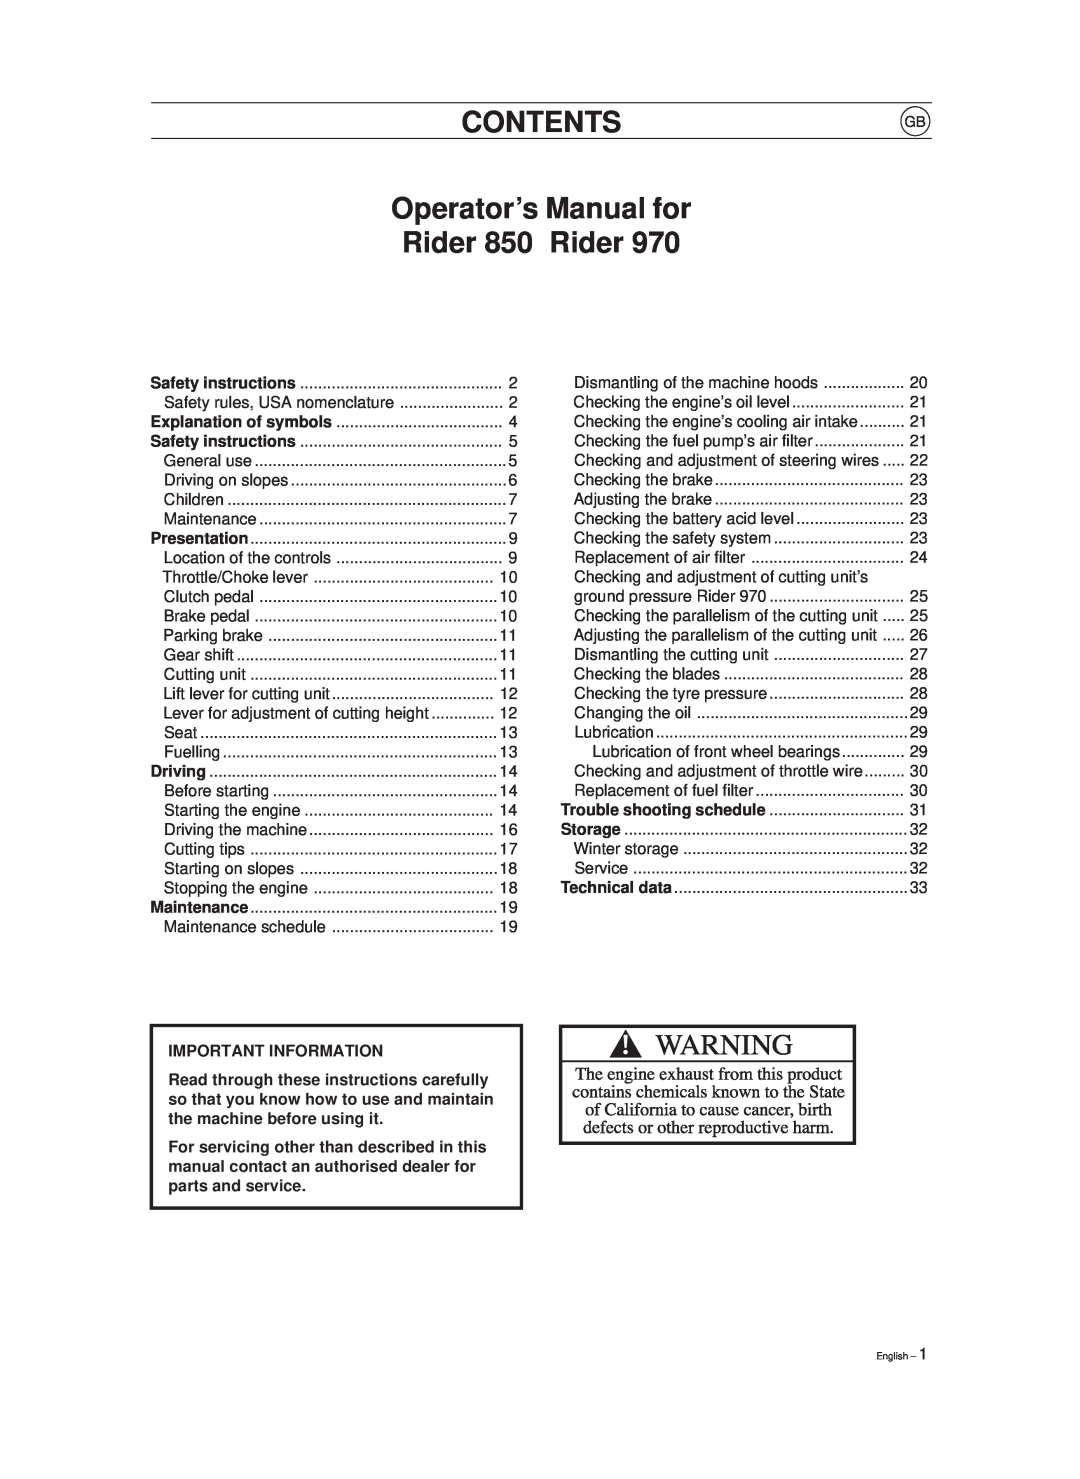 Husqvarna 970 manual CONTENTSE Operator’s Manual for Rider 850 Rider 